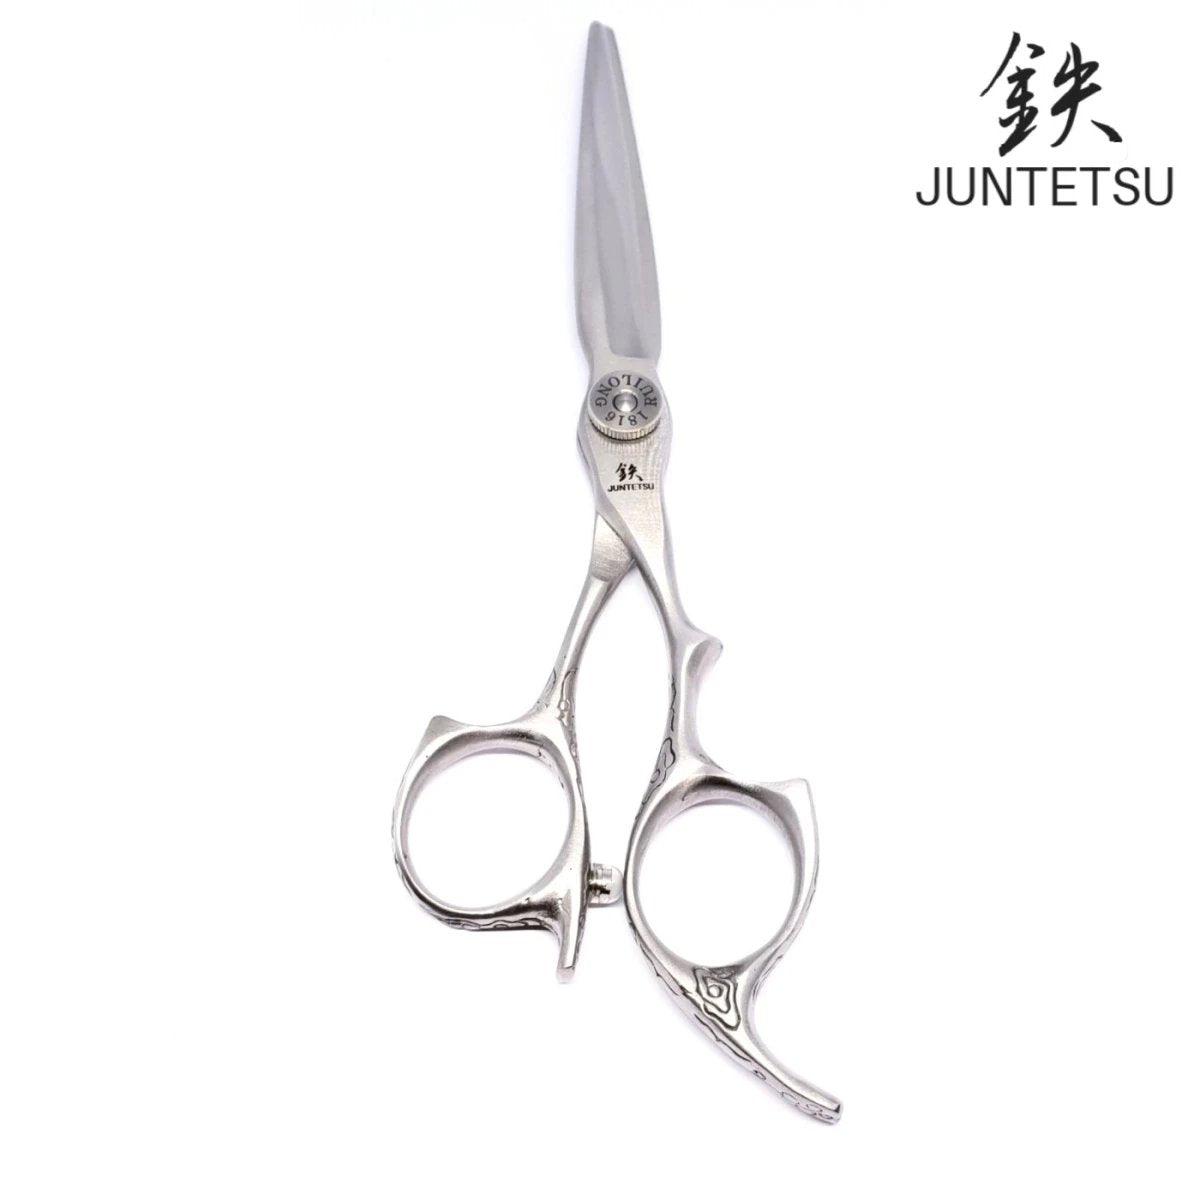 Juntetsu VG10 Hair Cutting Scissors - Japan Scissors